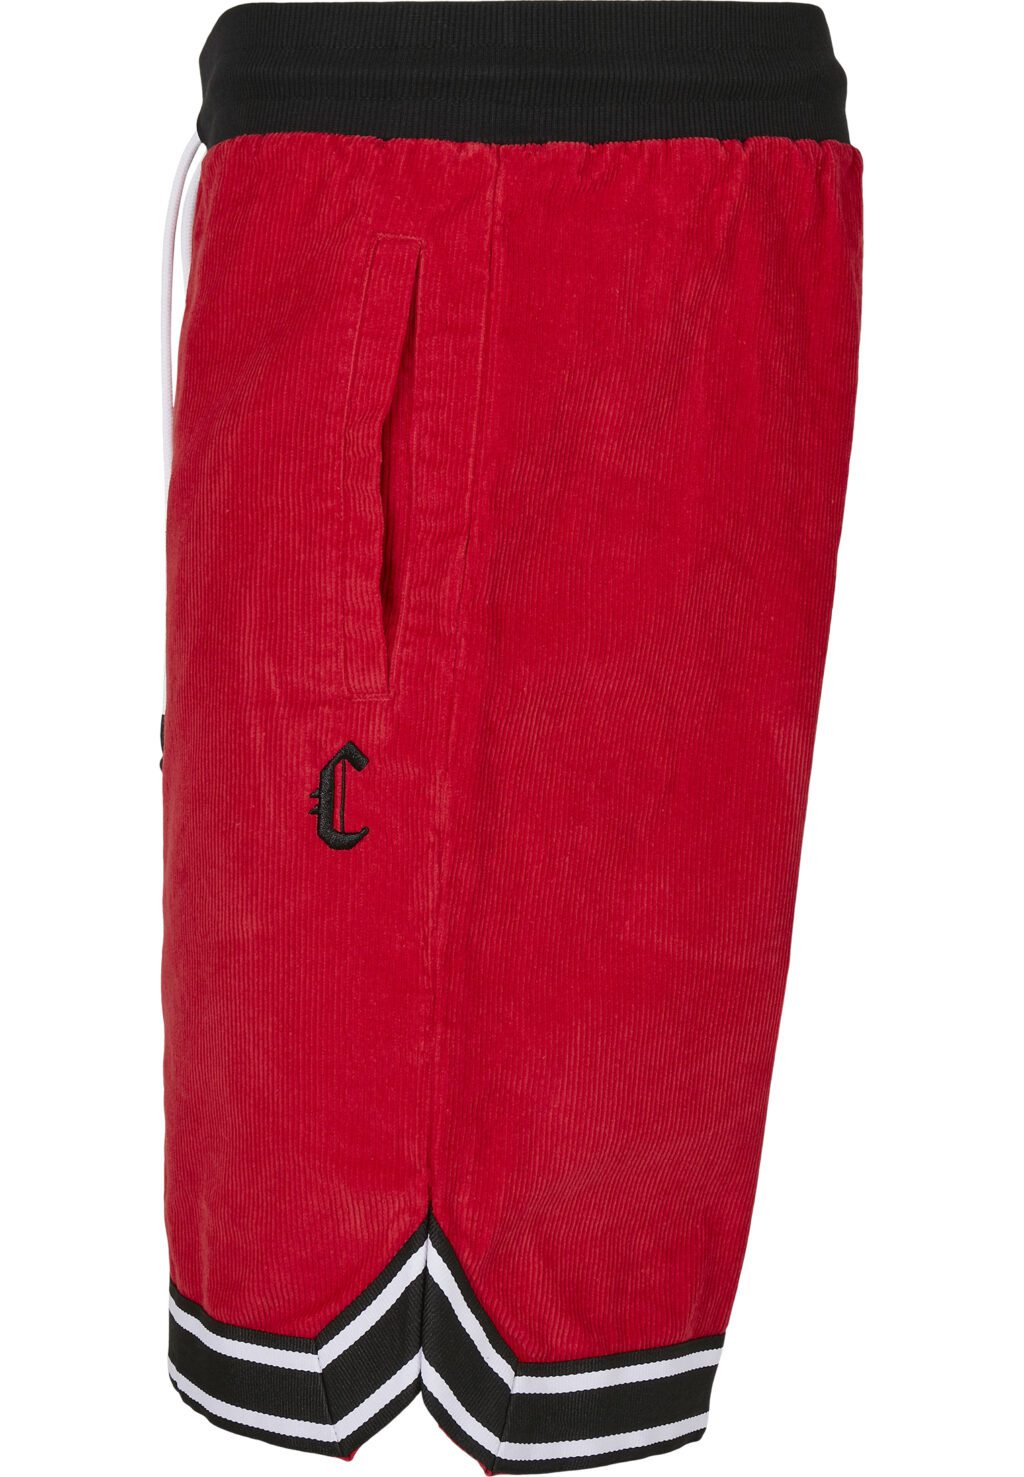 CSBL Reverse Banned Cord Shorts red/black CS2316